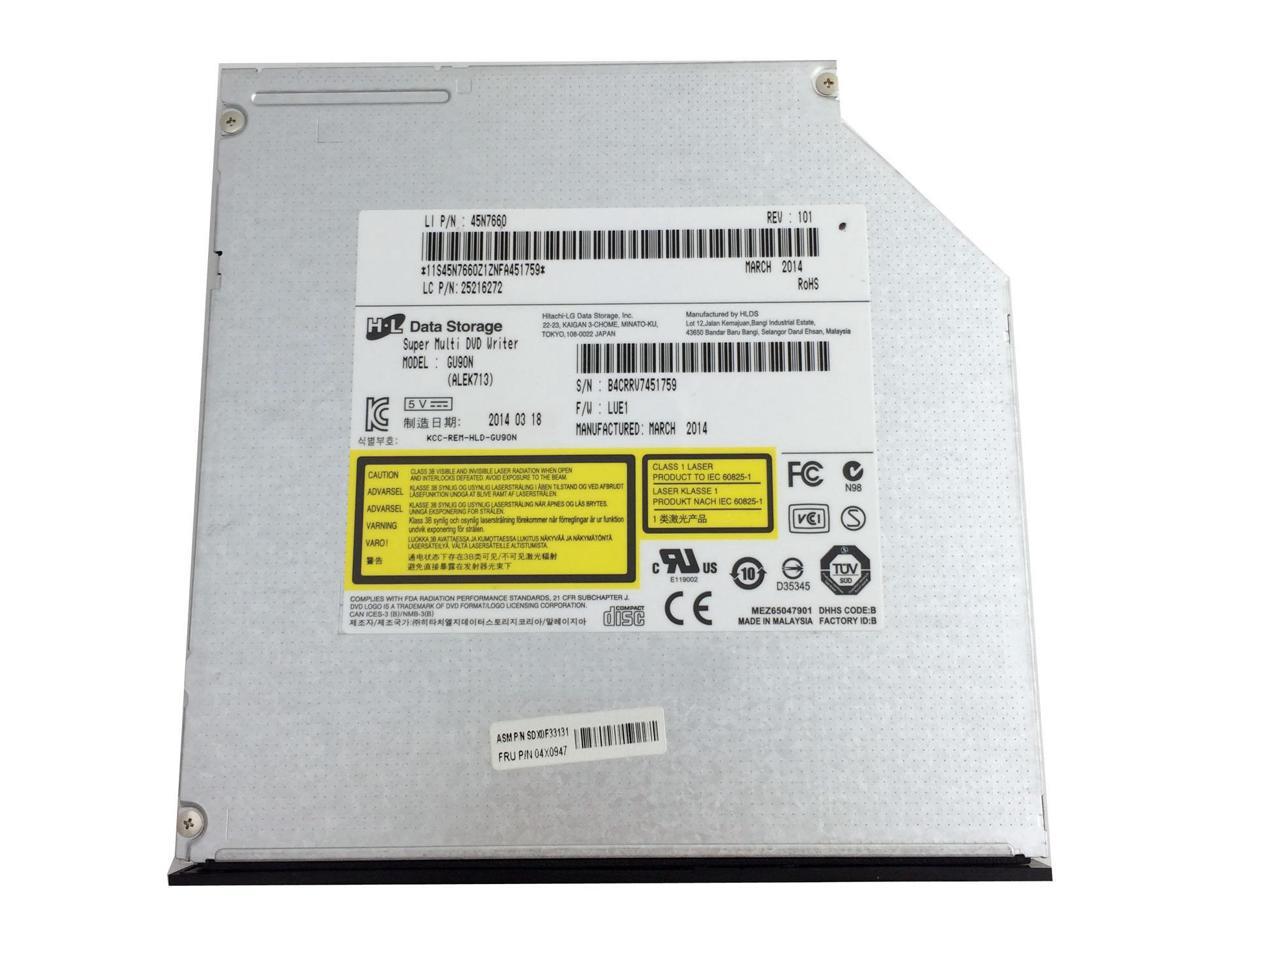 GU40N Super Multi DVD±RW Writer Burner Laptop SATA 9.5mm Optical Drive No bezel 